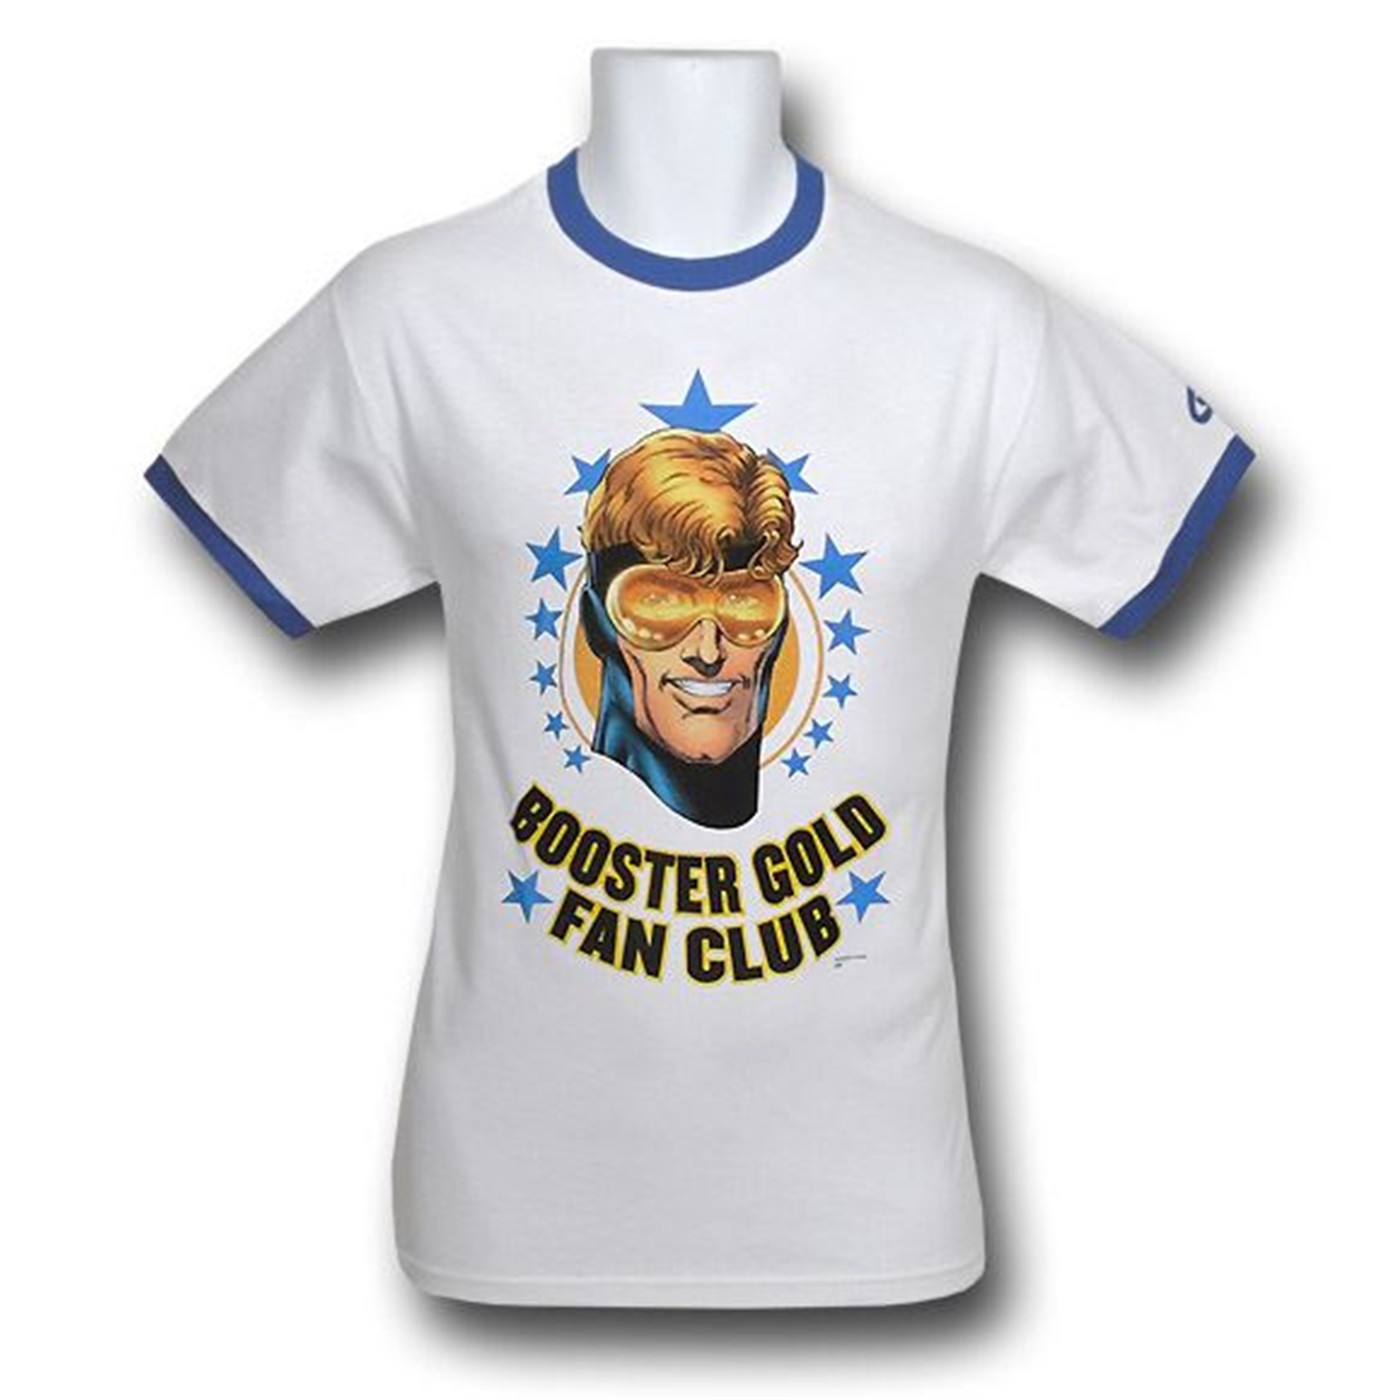 Booster Gold Fan Club Ringer T-Shirt